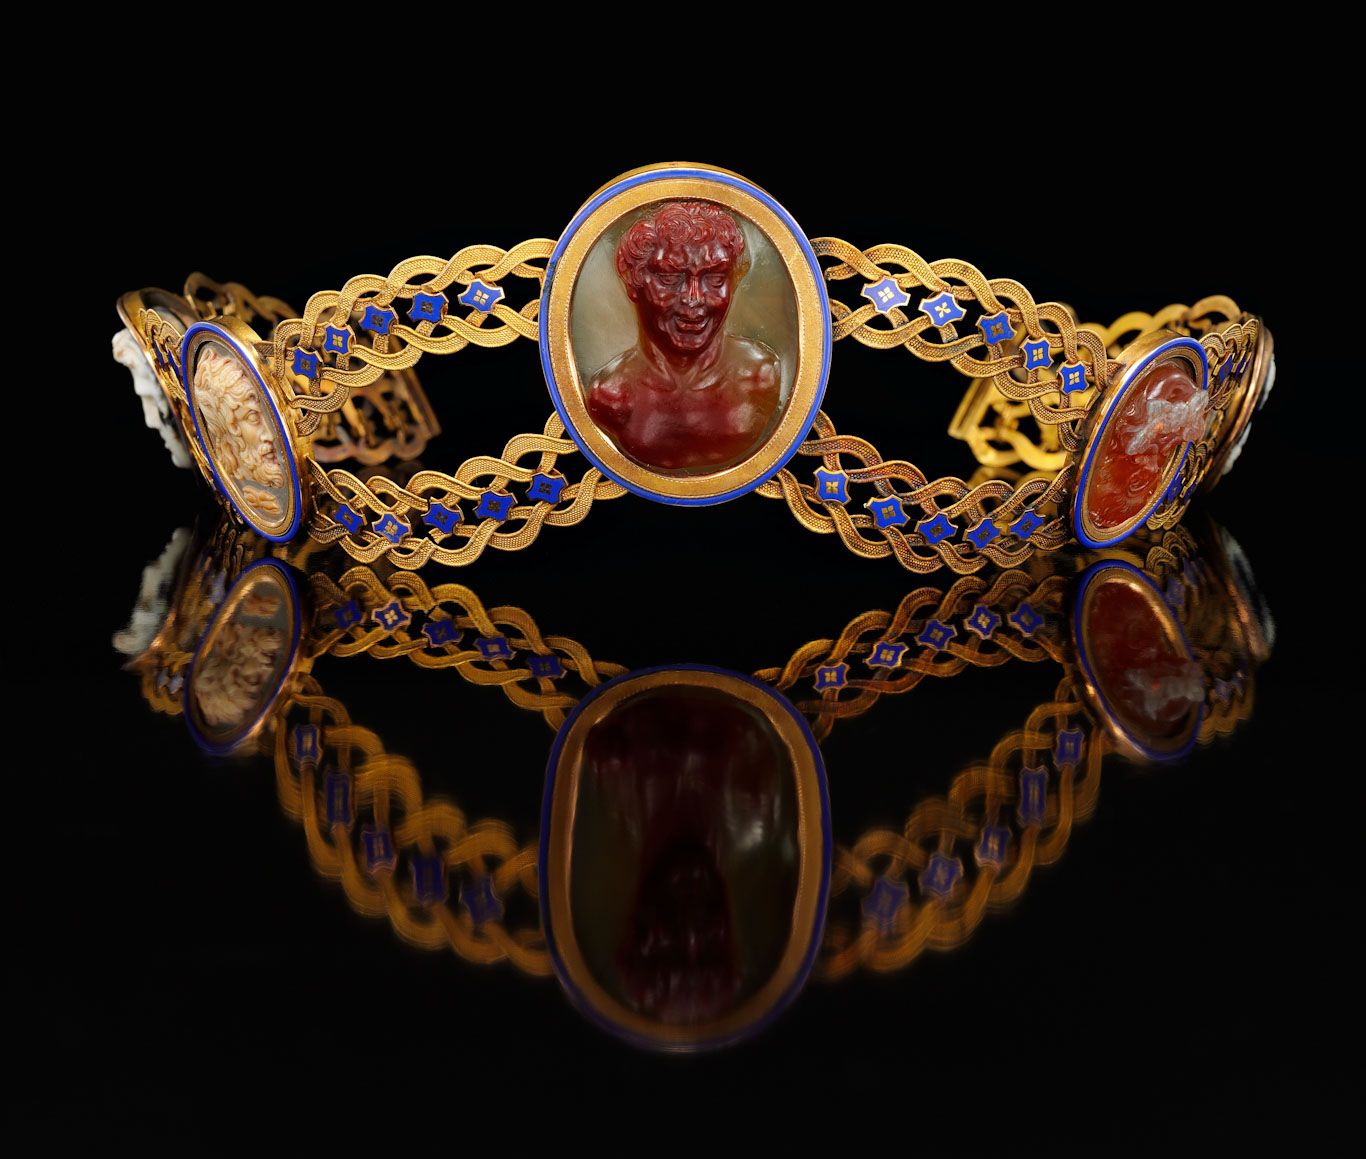 Josephine Bonaparte's gold, cameo and enamel diadem